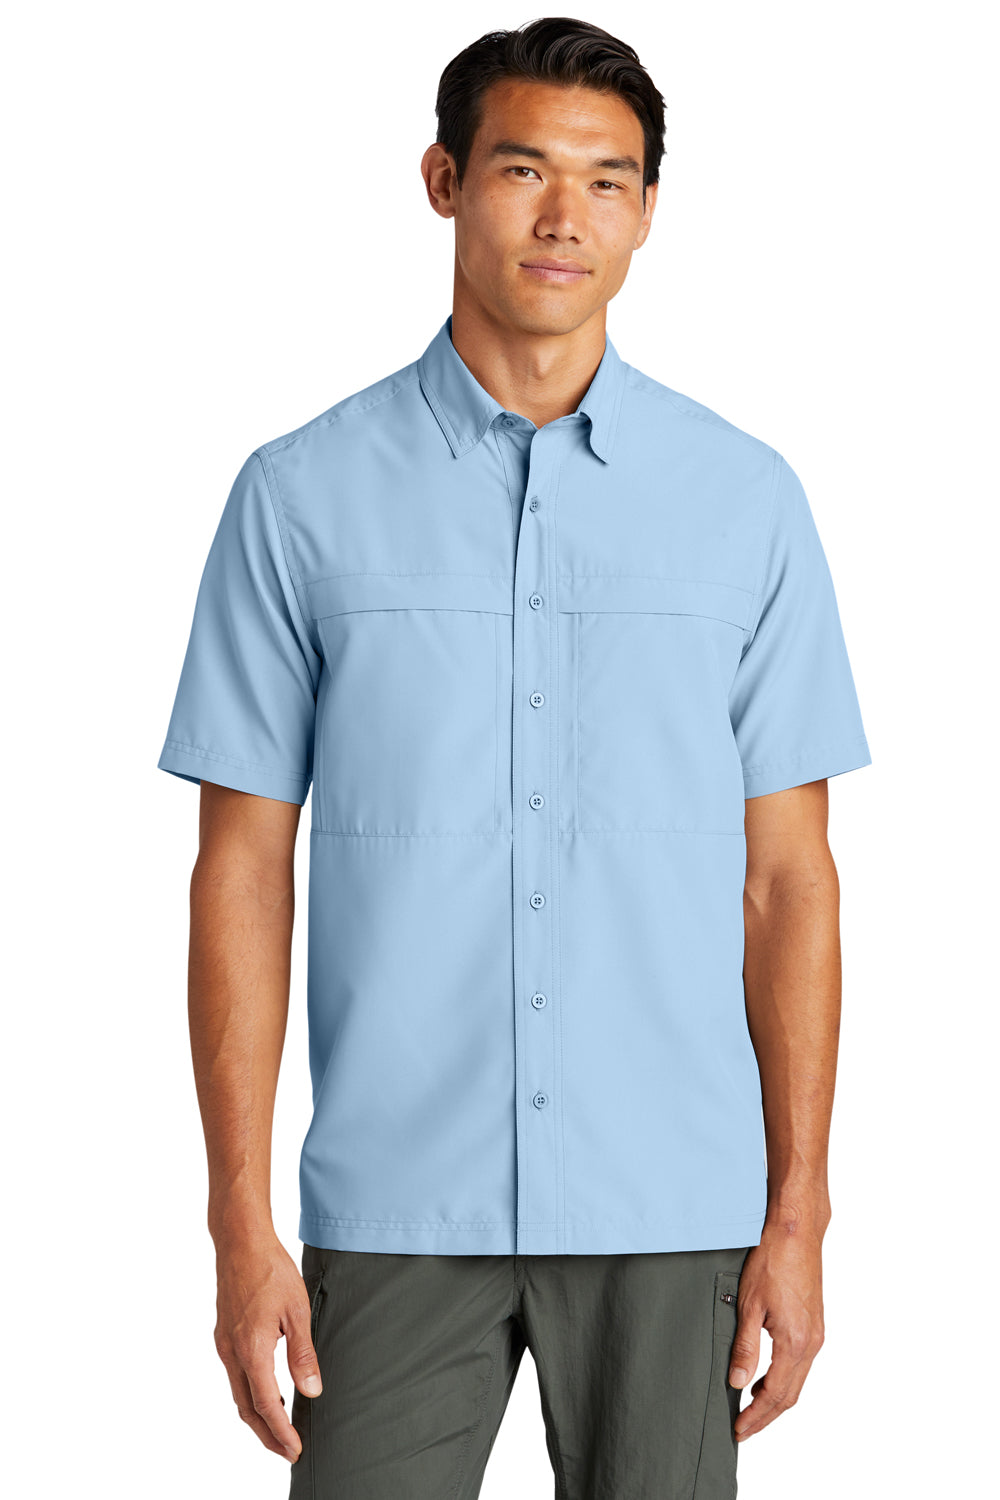 Port Authority W961 UV Daybreak Short Sleeve Button Down Shirt Light Blue Front